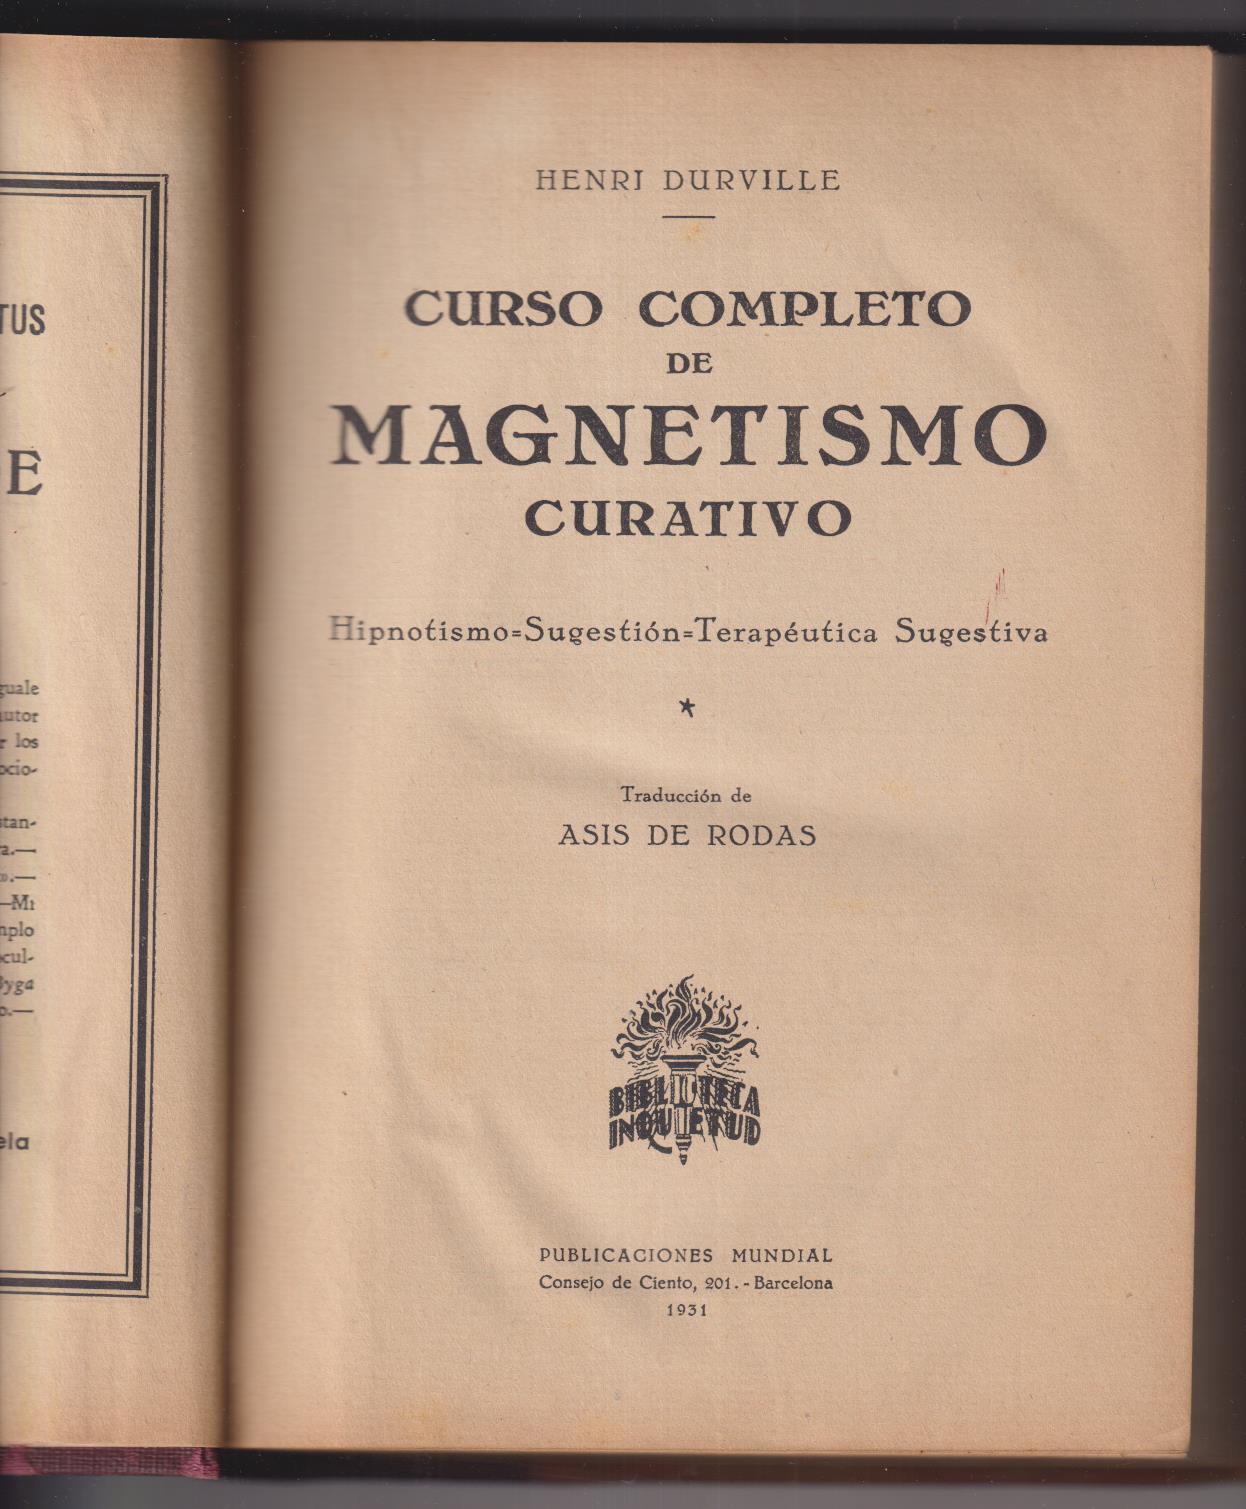 Henri Durville. Curso completo de Magnetismo Curativo. Publicaciones Mundial 1931